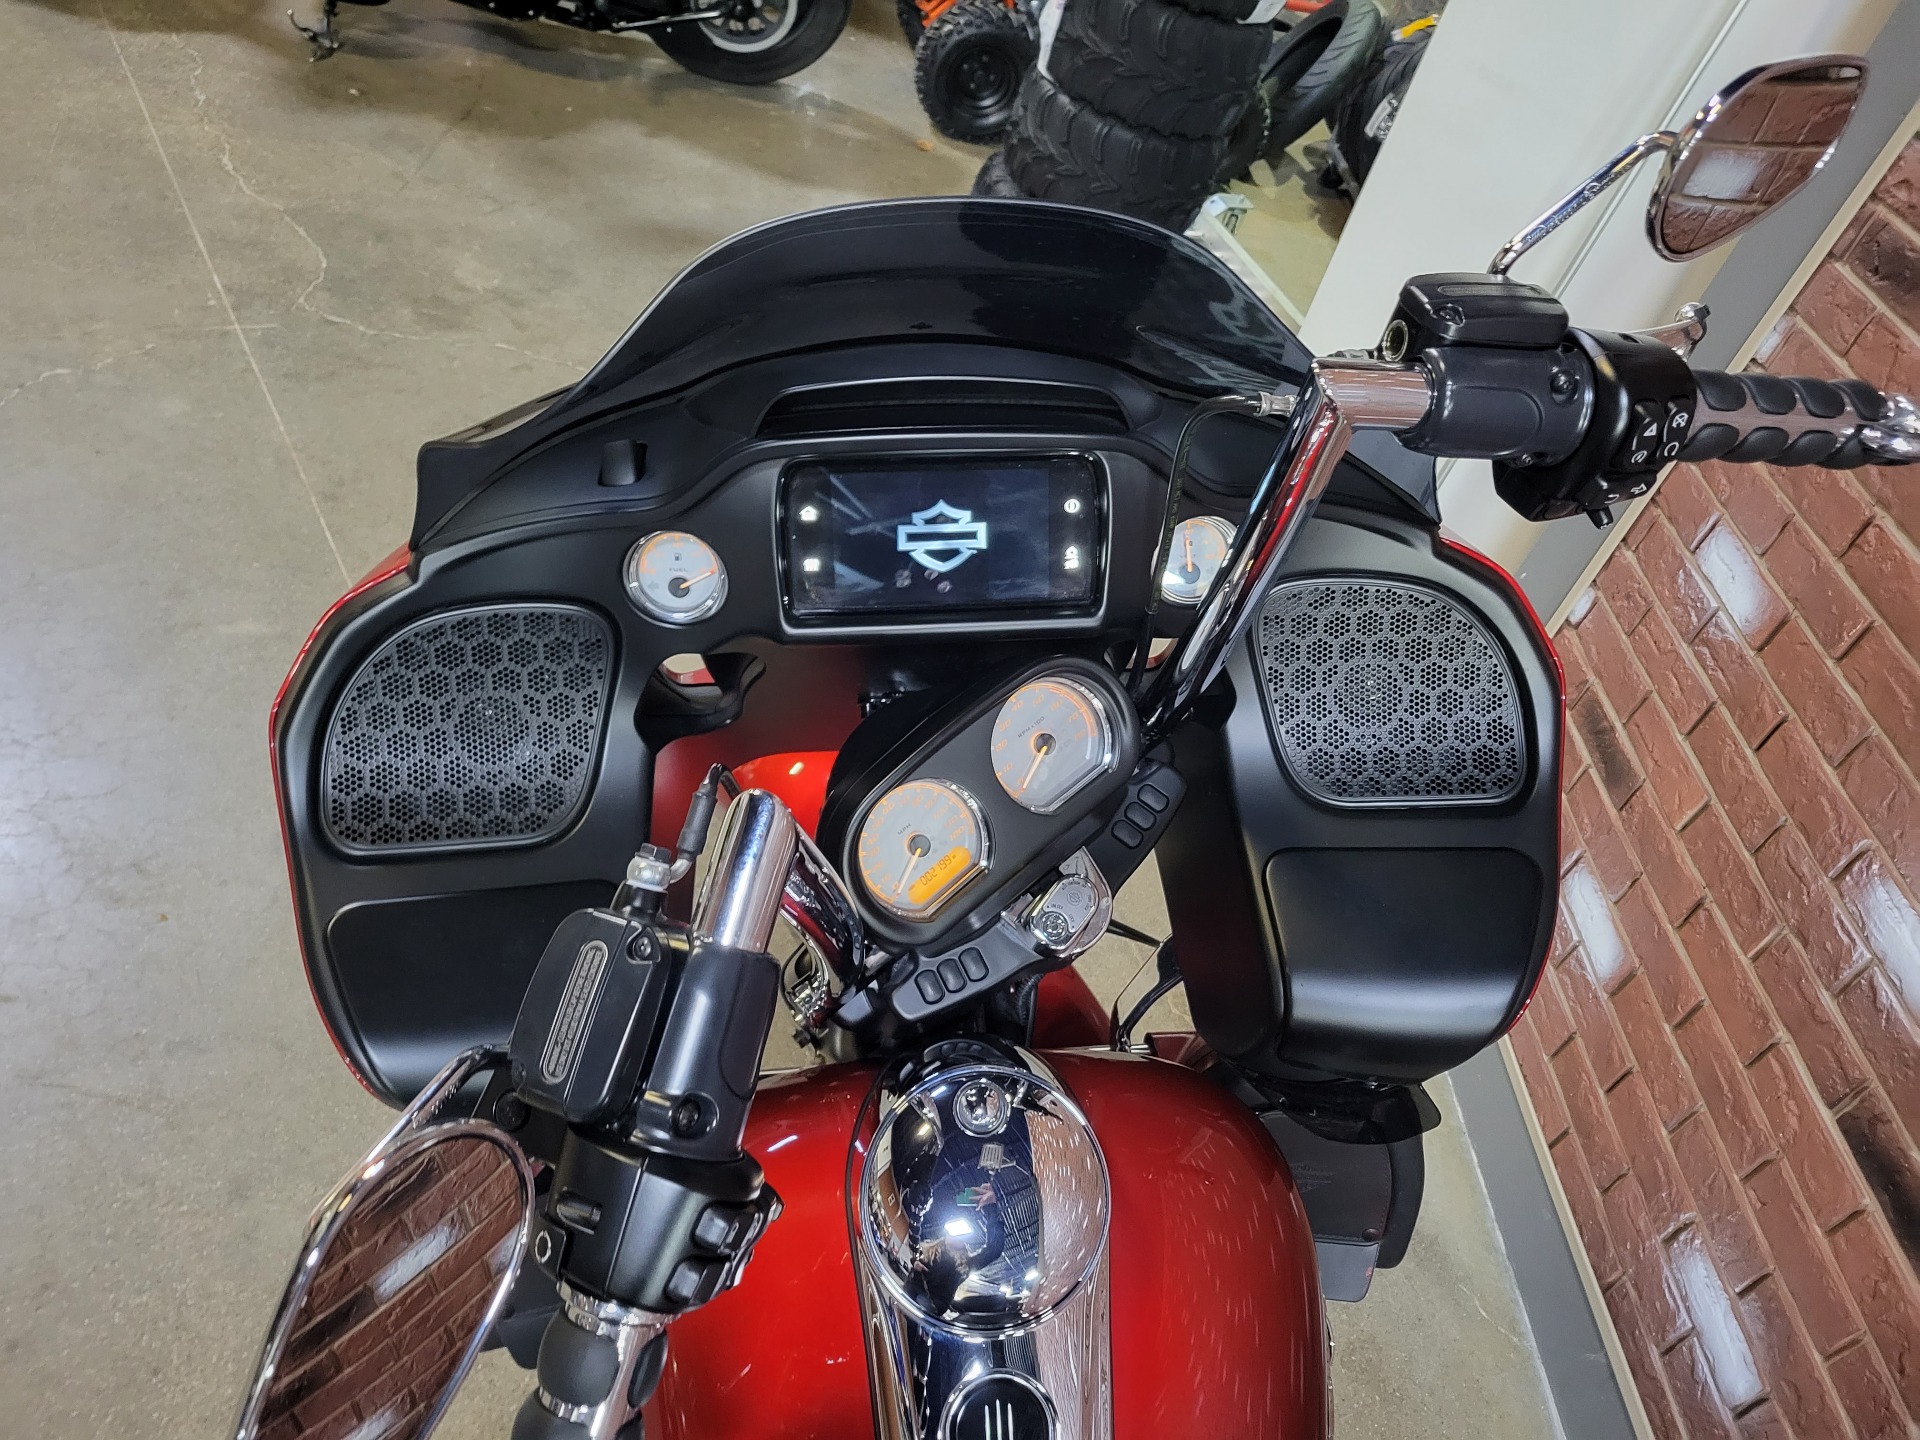 2019 Harley-Davidson Road Glide® in Dimondale, Michigan - Photo 5